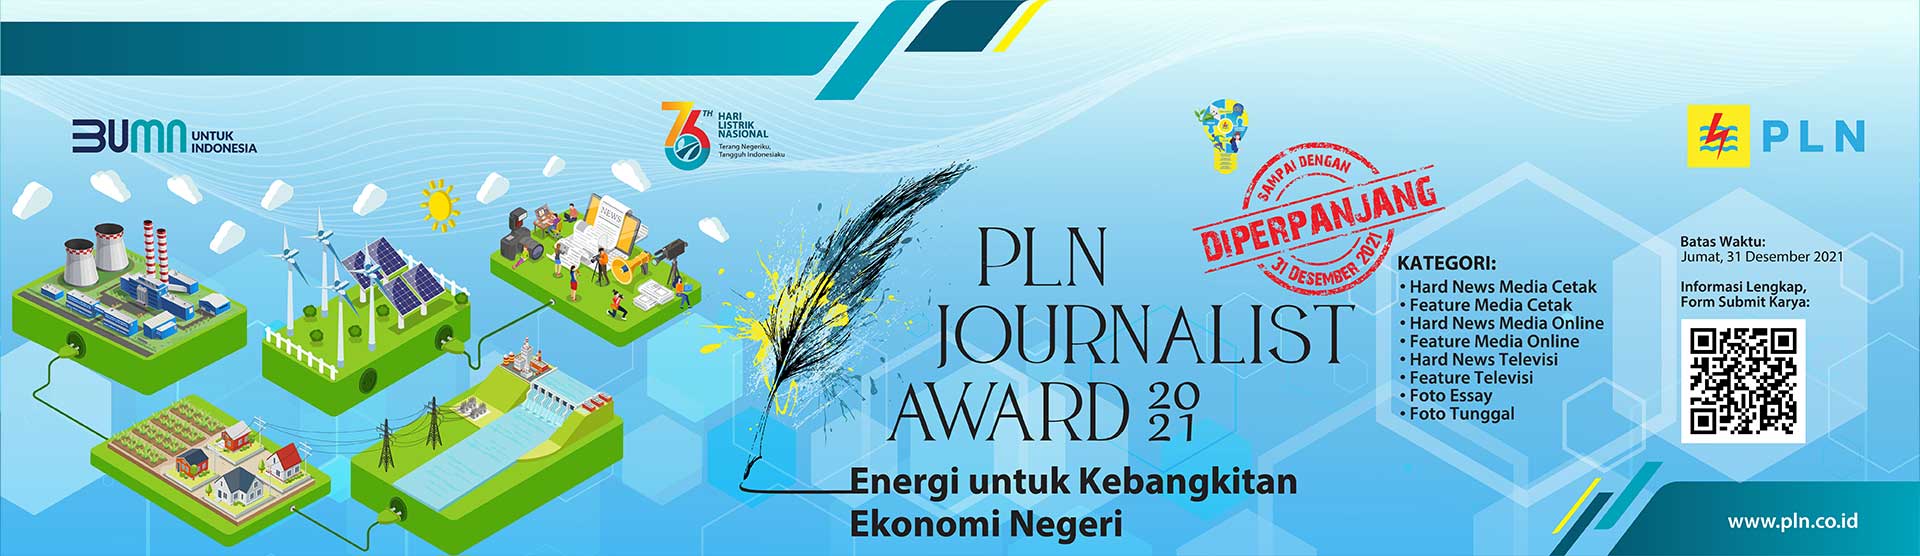 /pln-journalist-award-2021